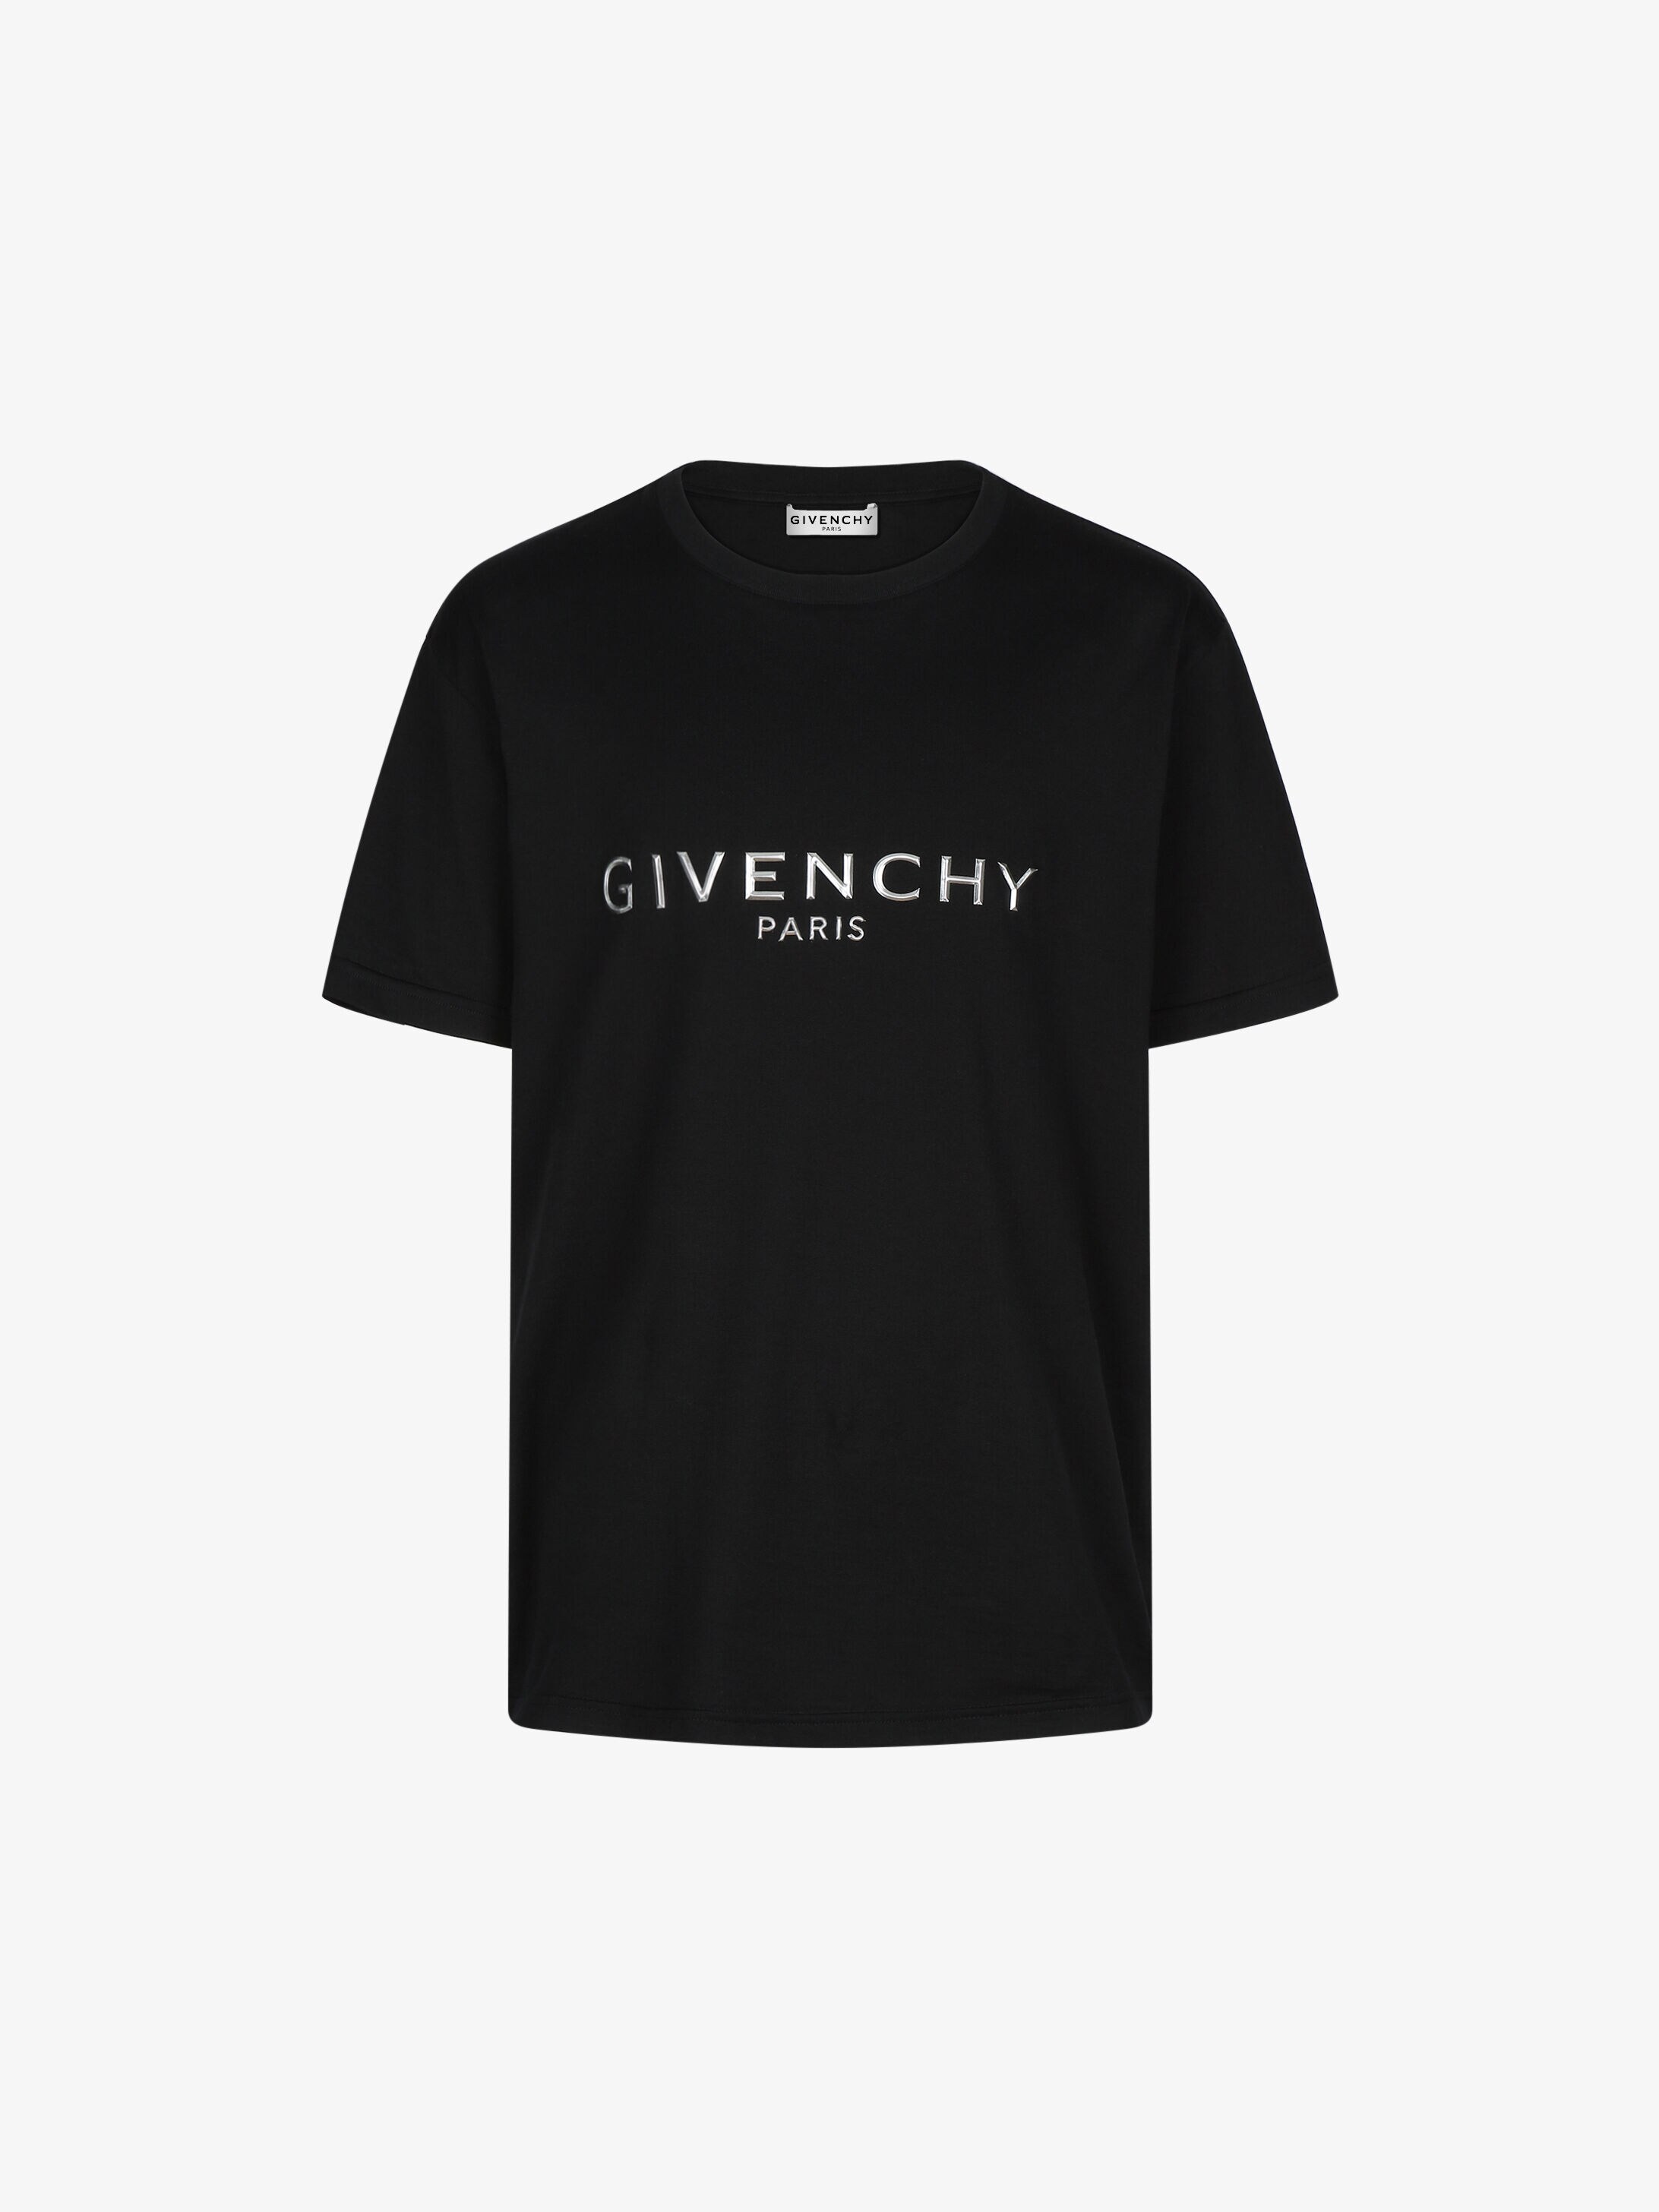 givenchy shirt cost